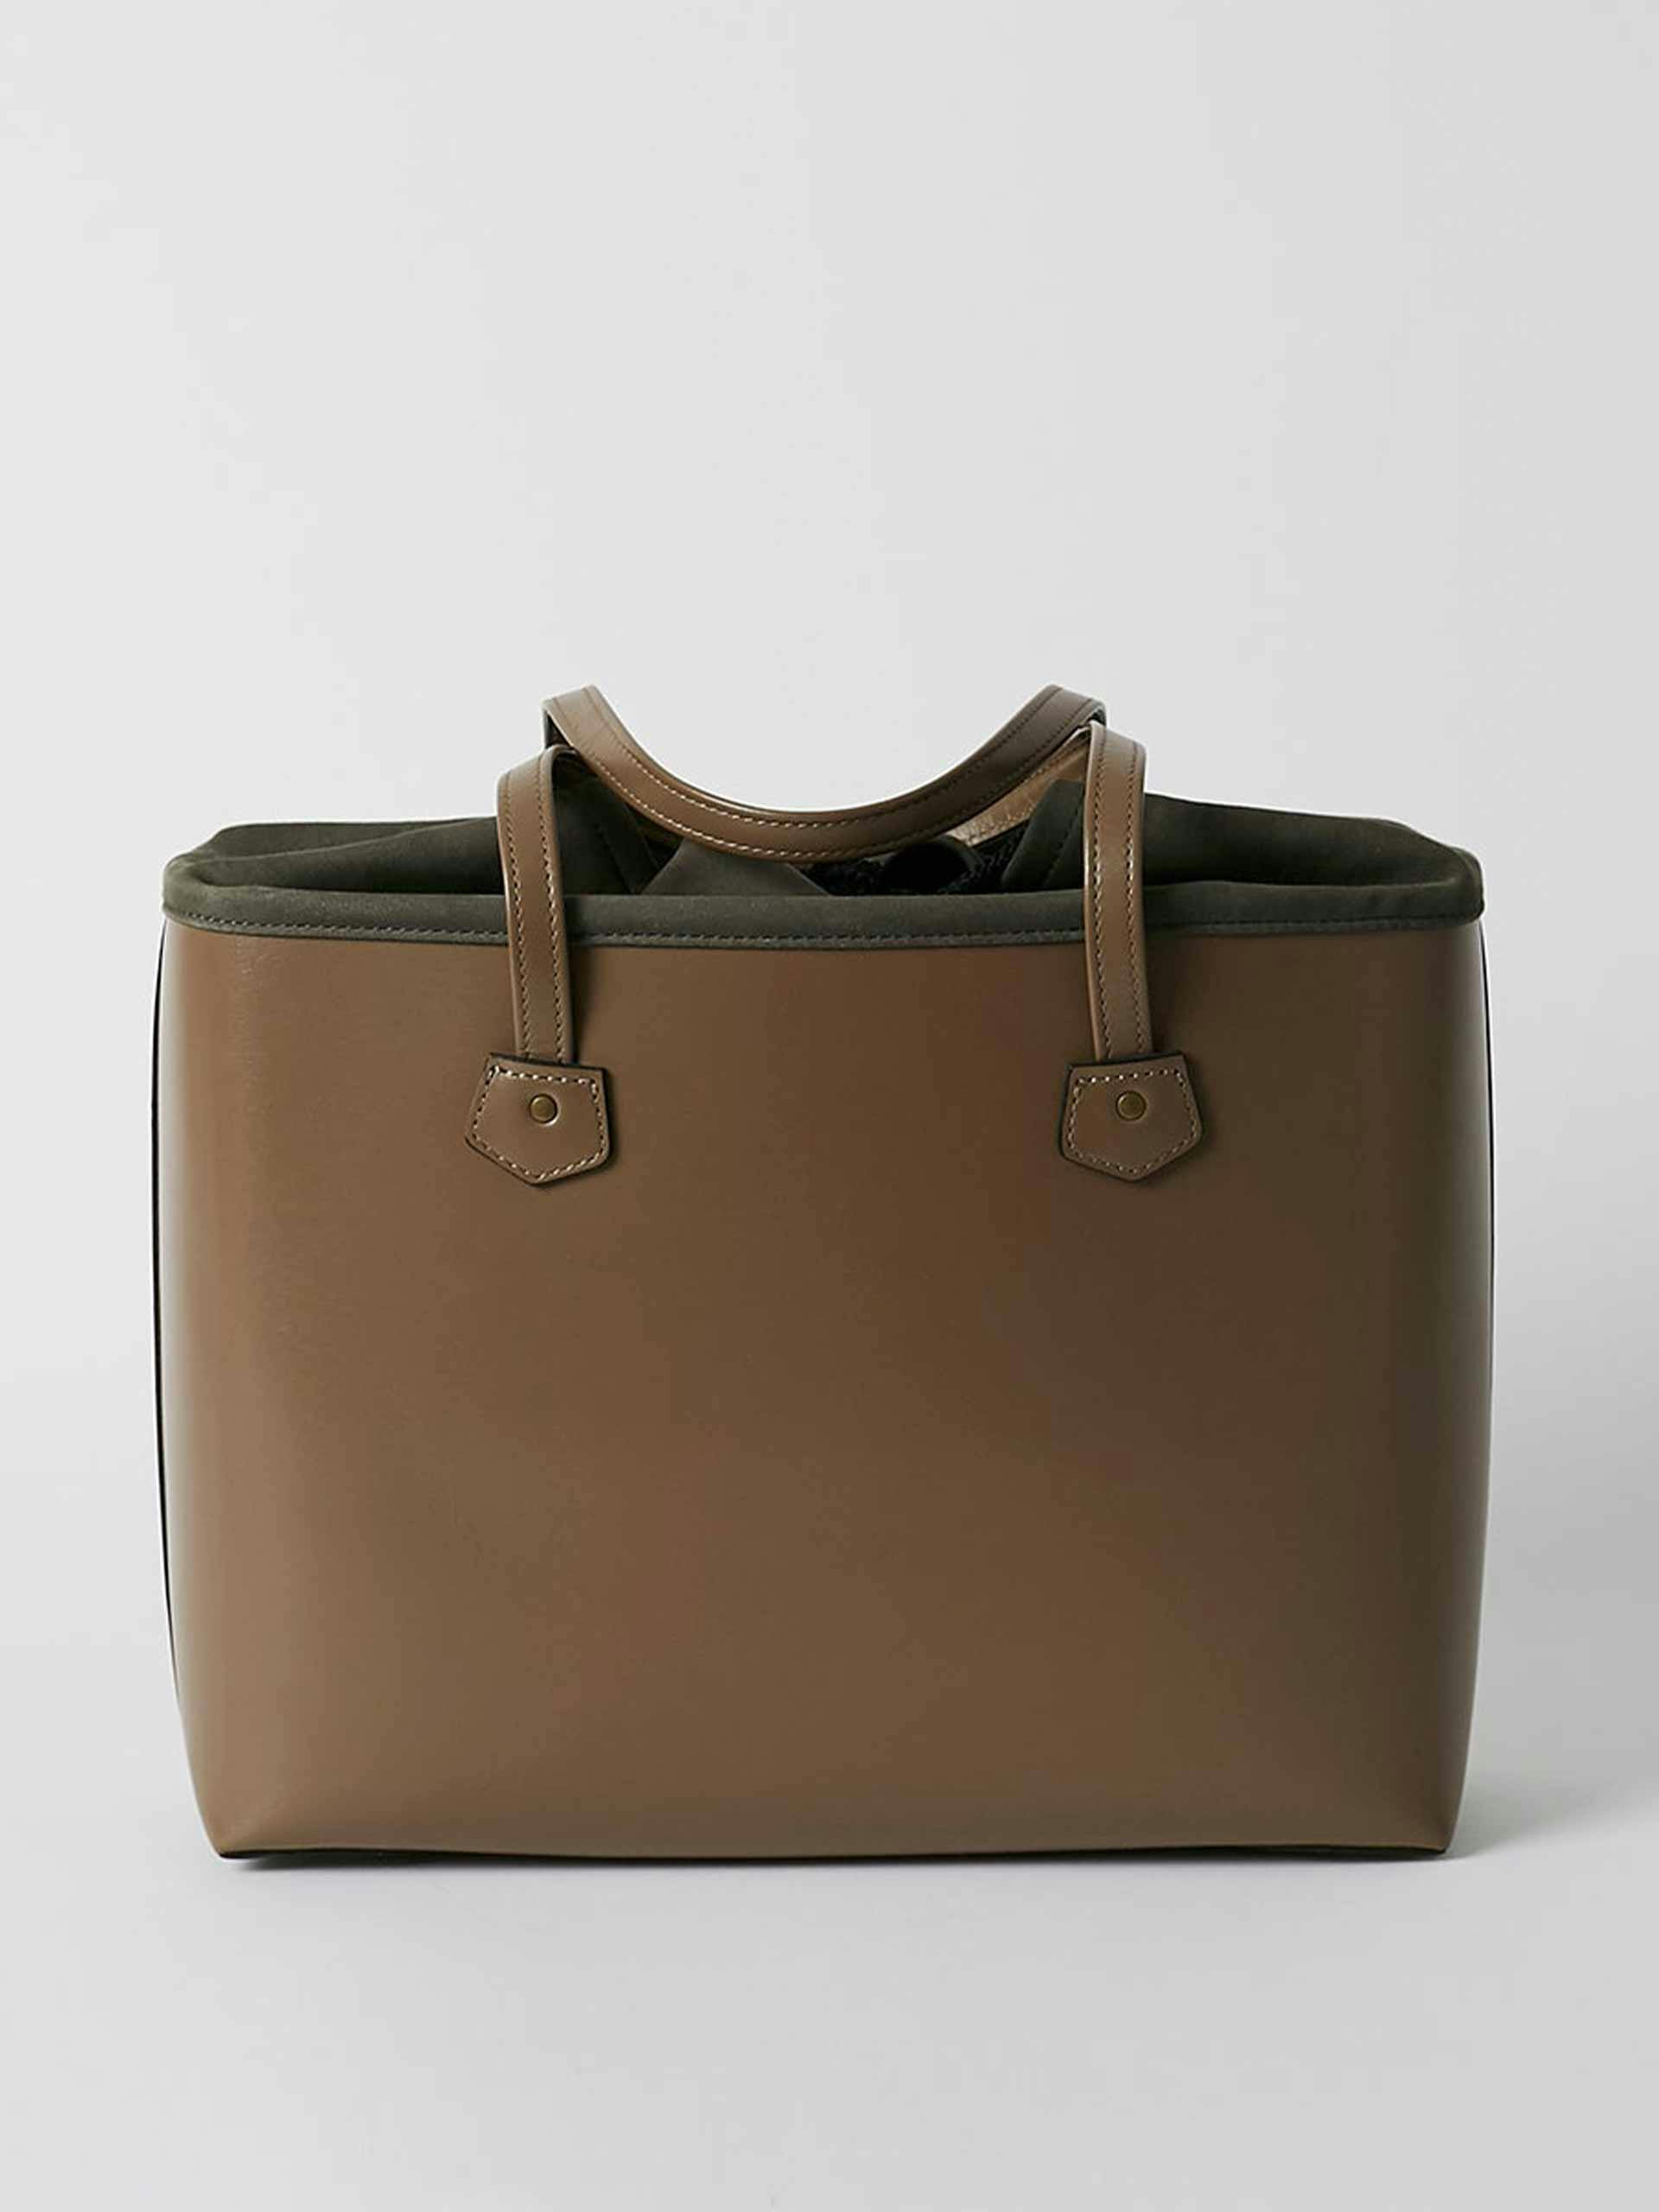 Calf leather box drawstring bag